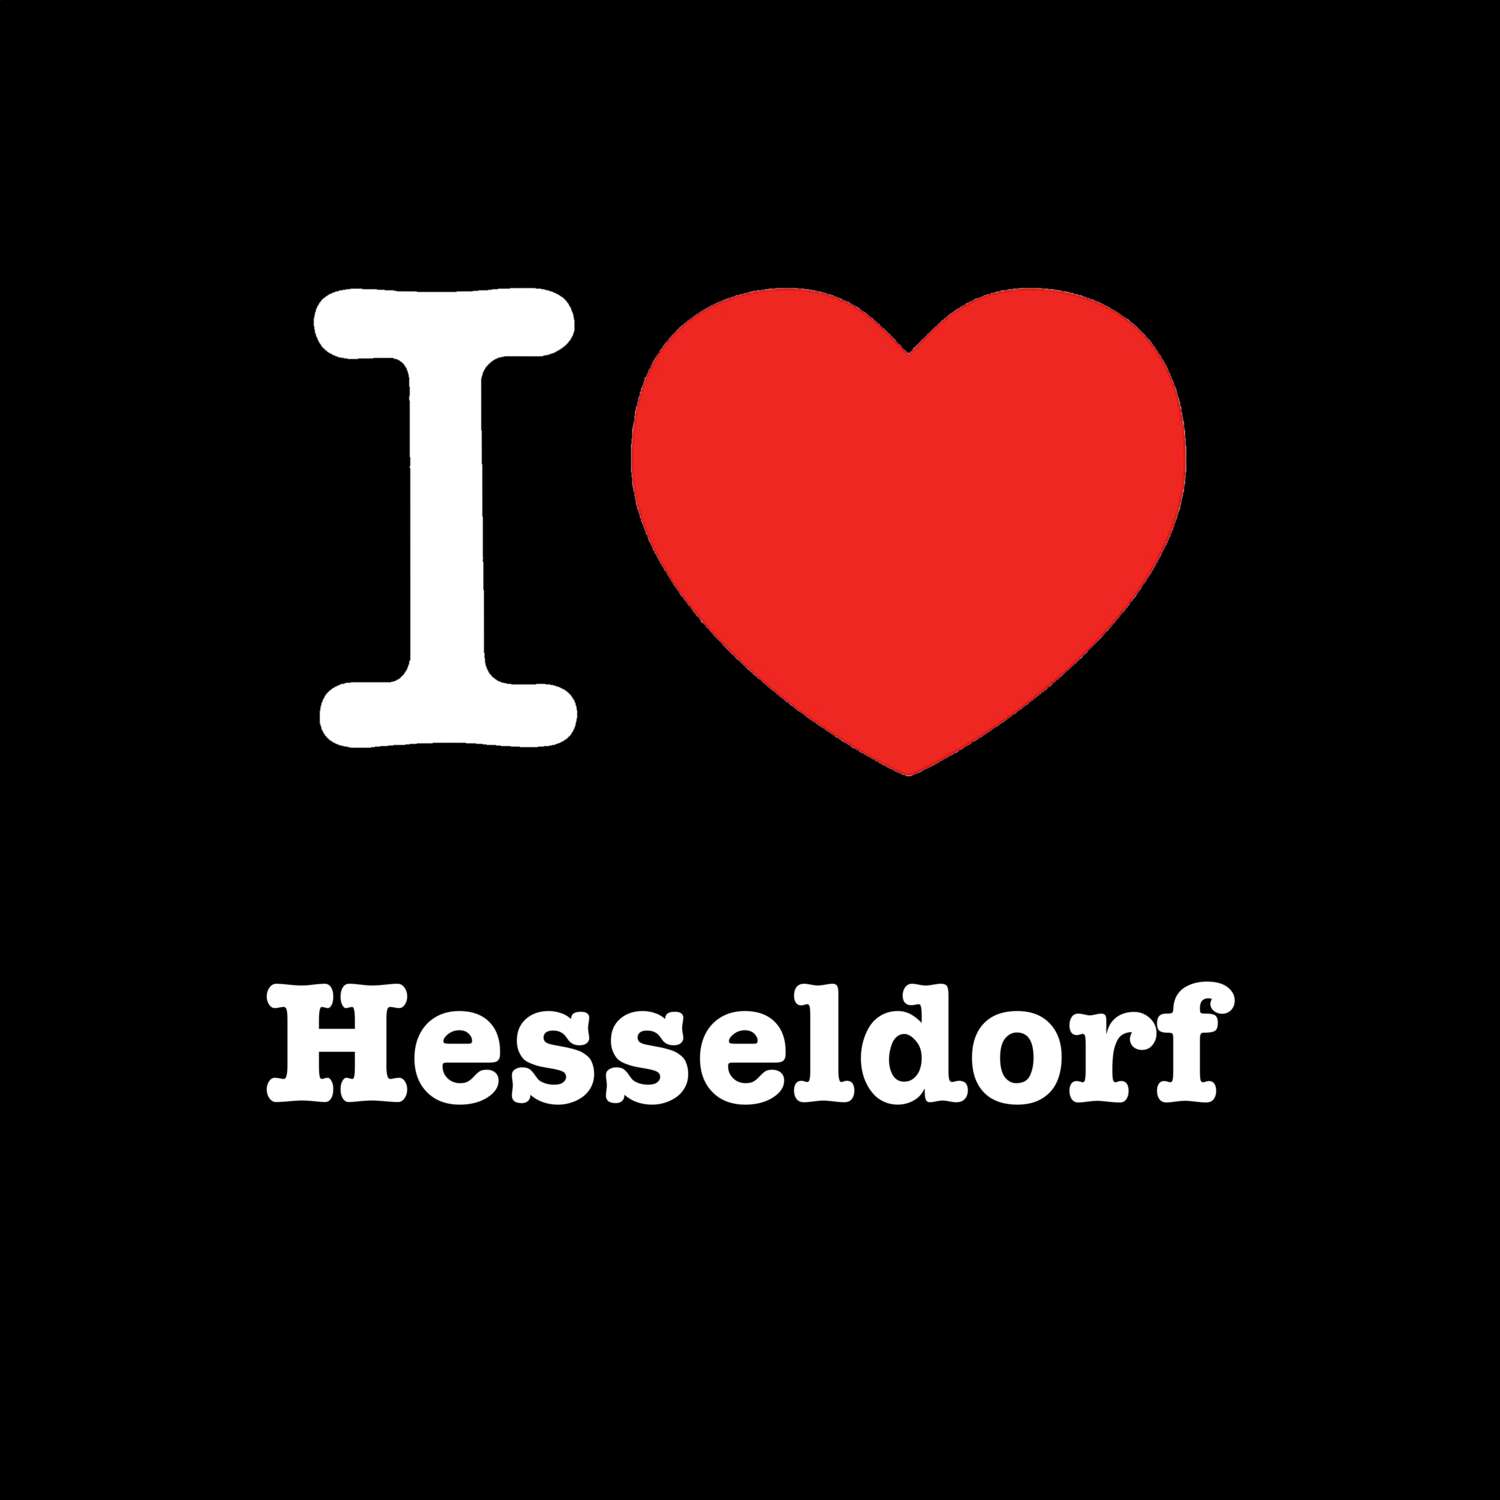 Hesseldorf T-Shirt »I love«